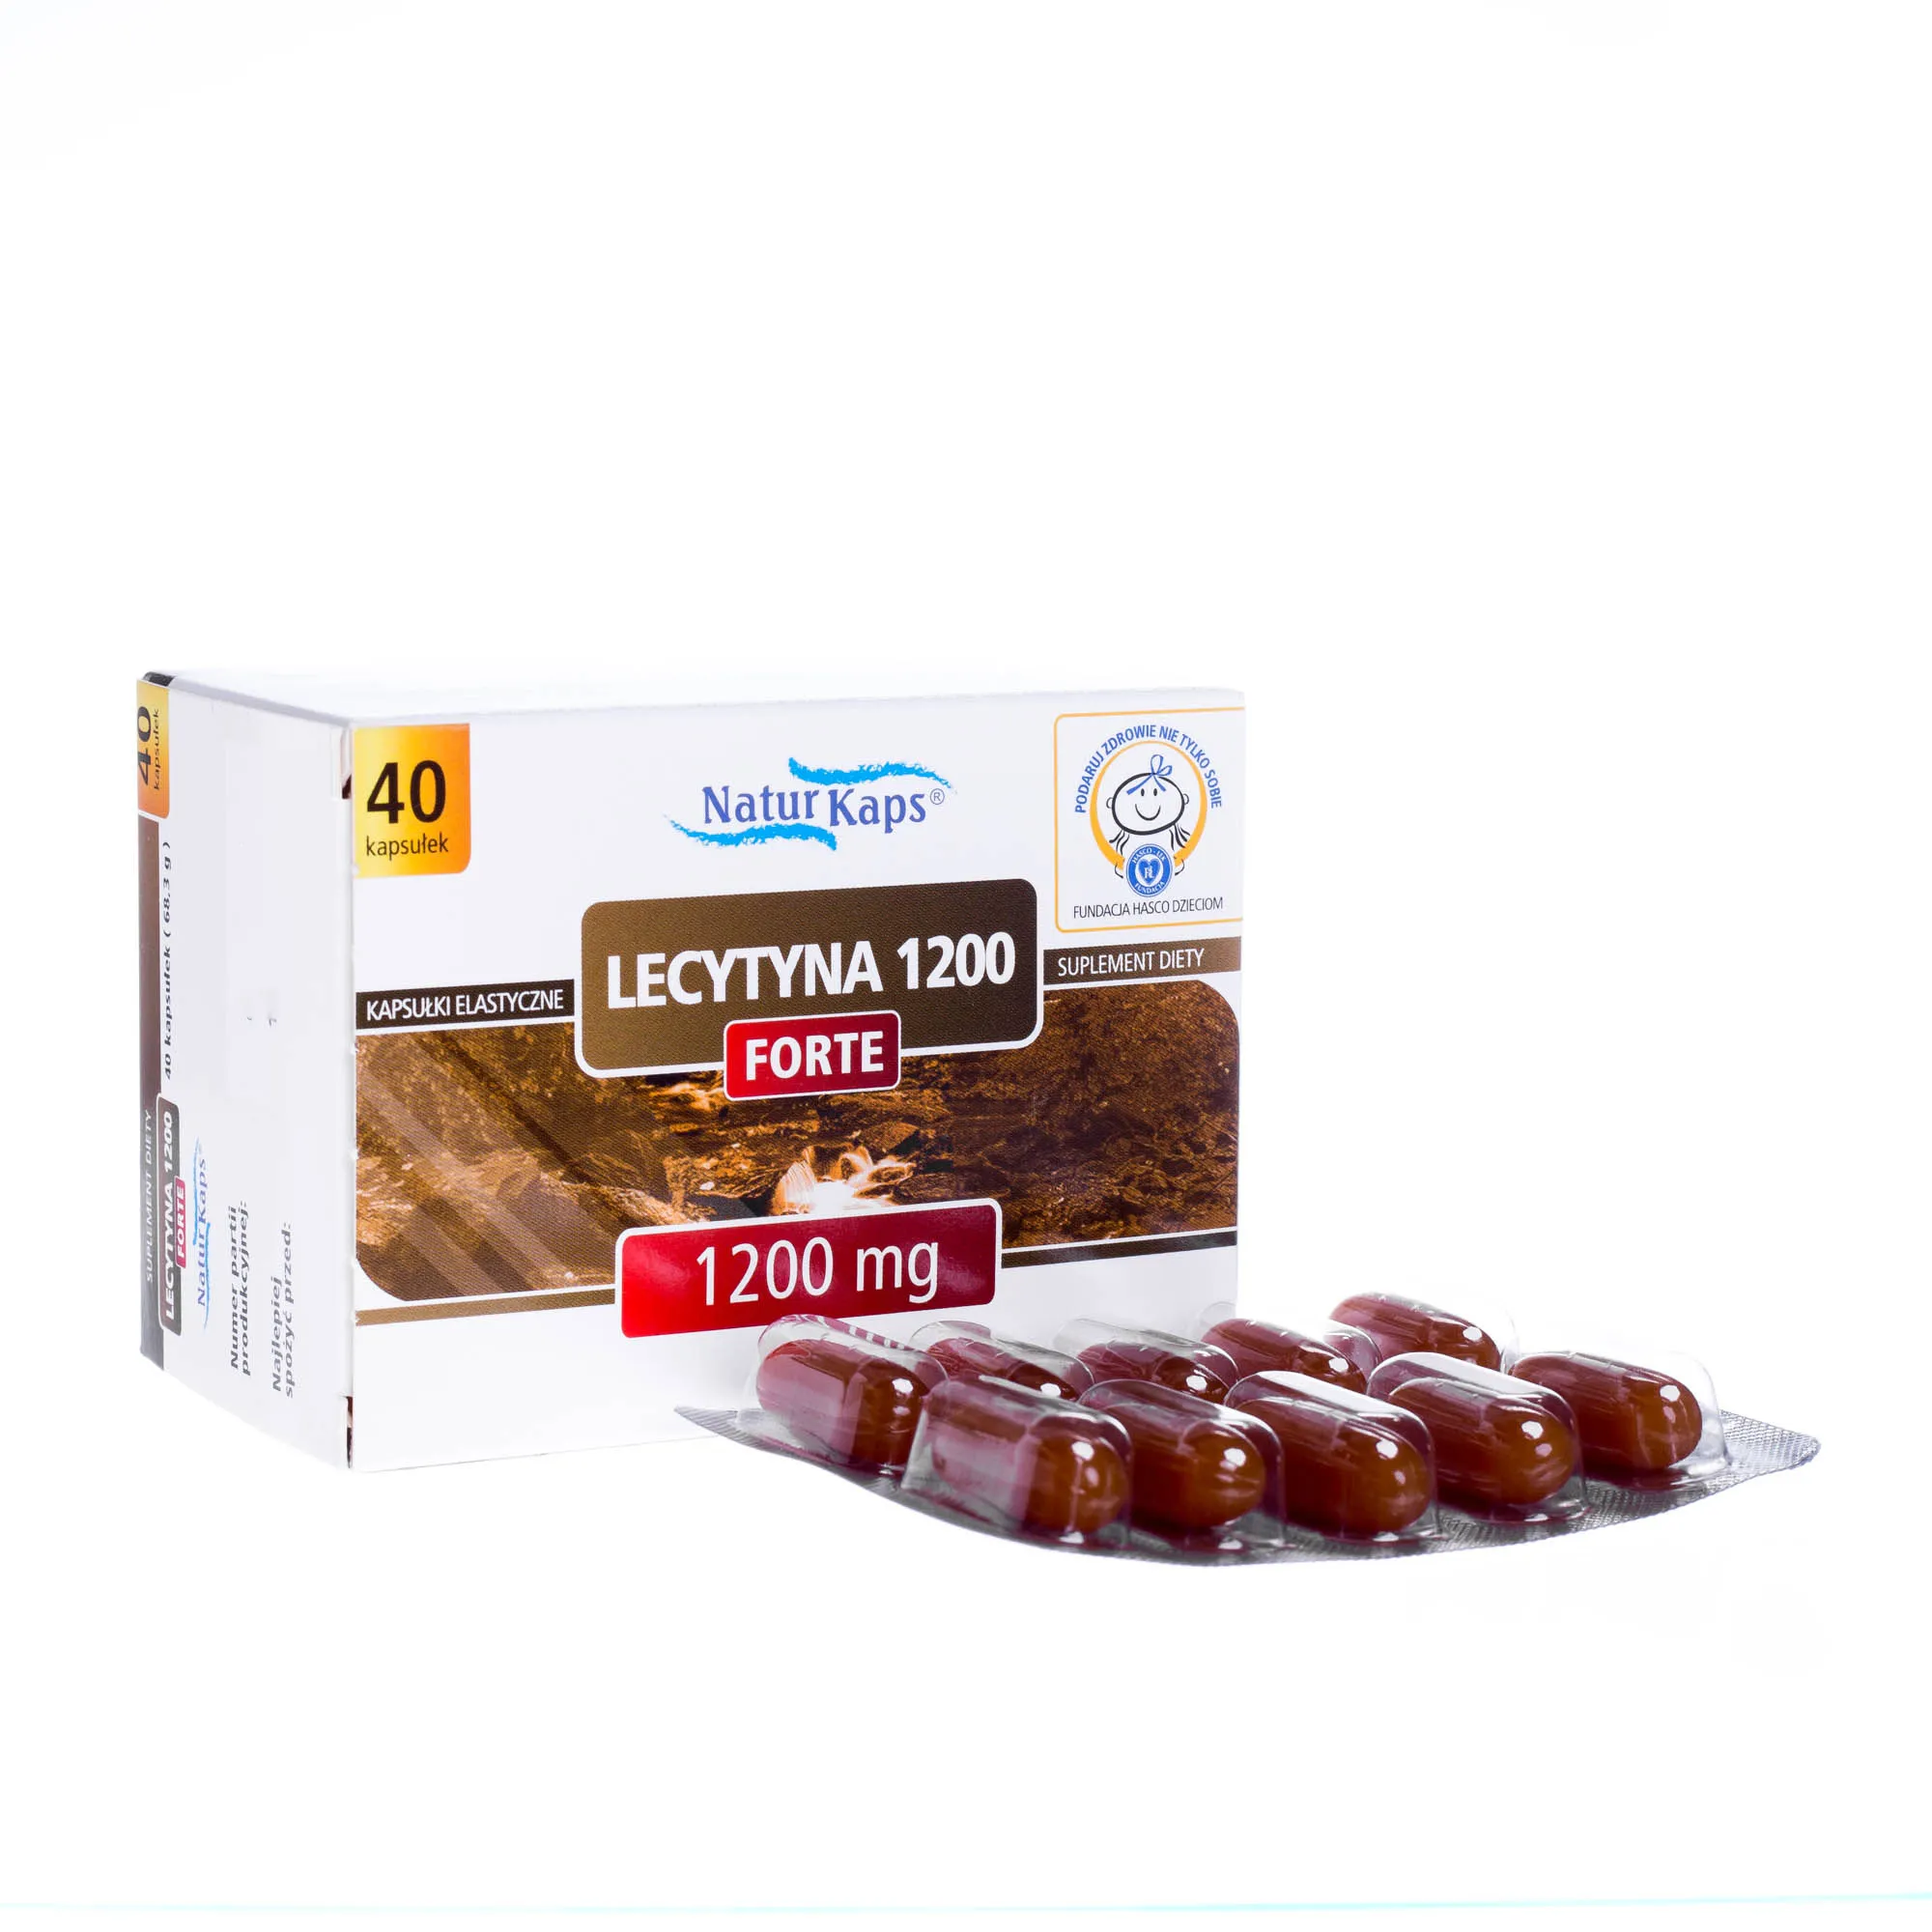 Naturkaps Lecytyna 1200 mg Forte, 40 kapsułek